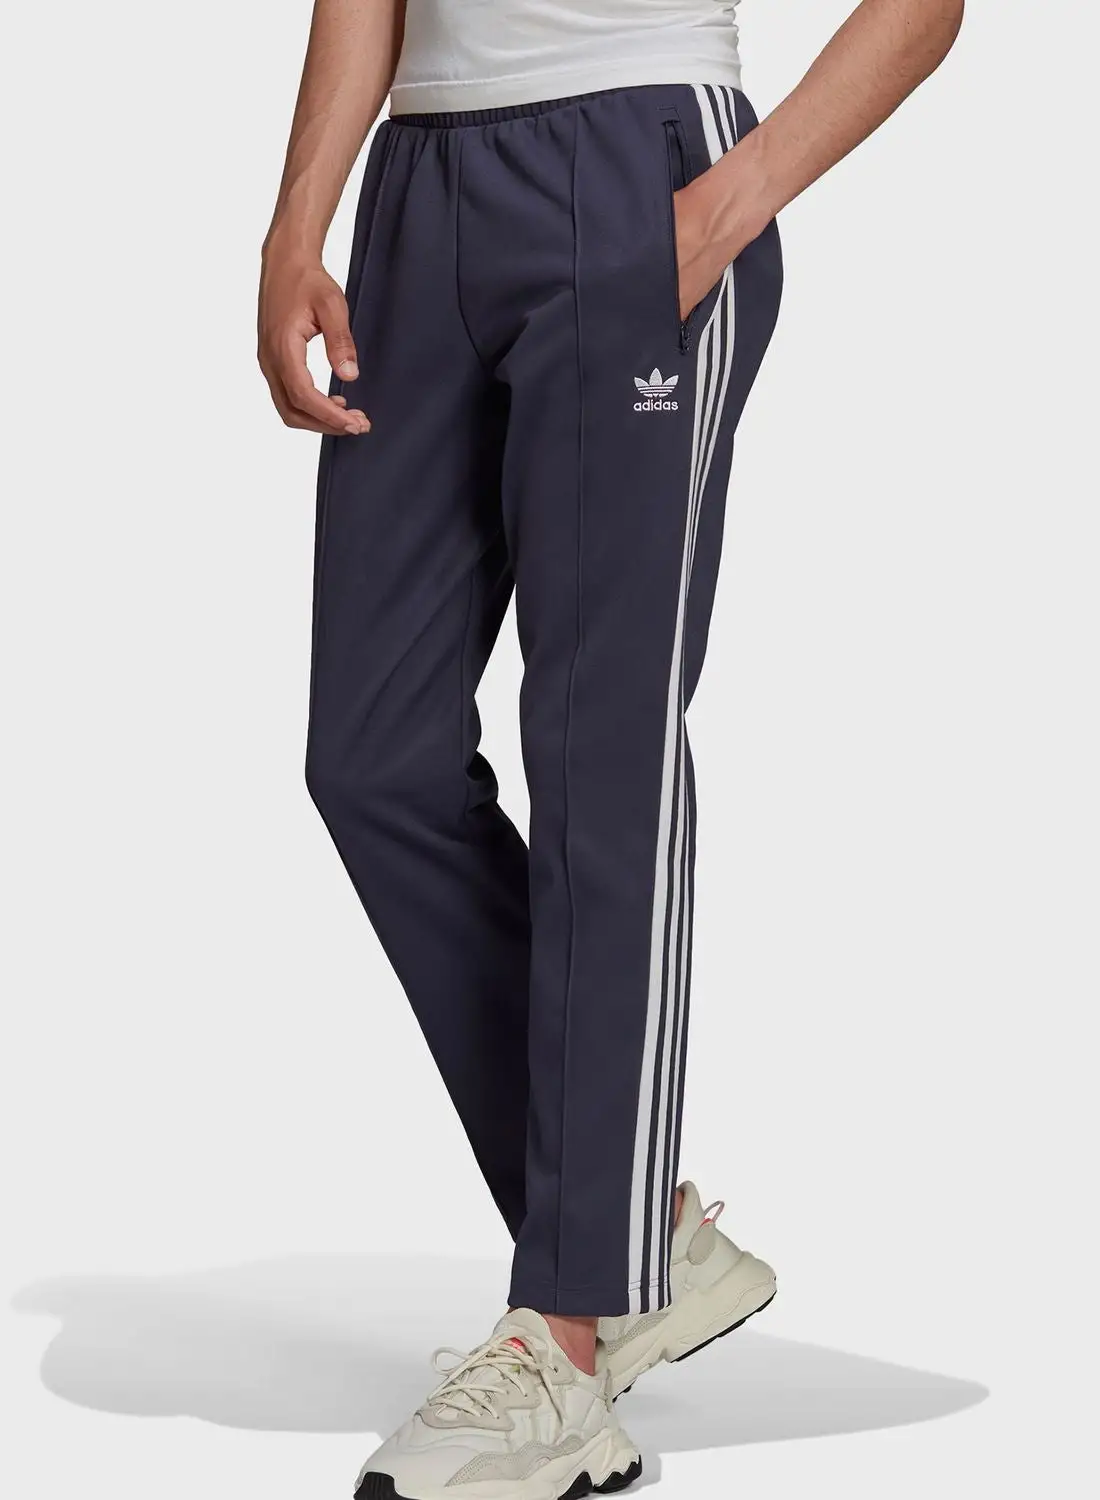 adidas Originals Beckenbauer Sweatpants